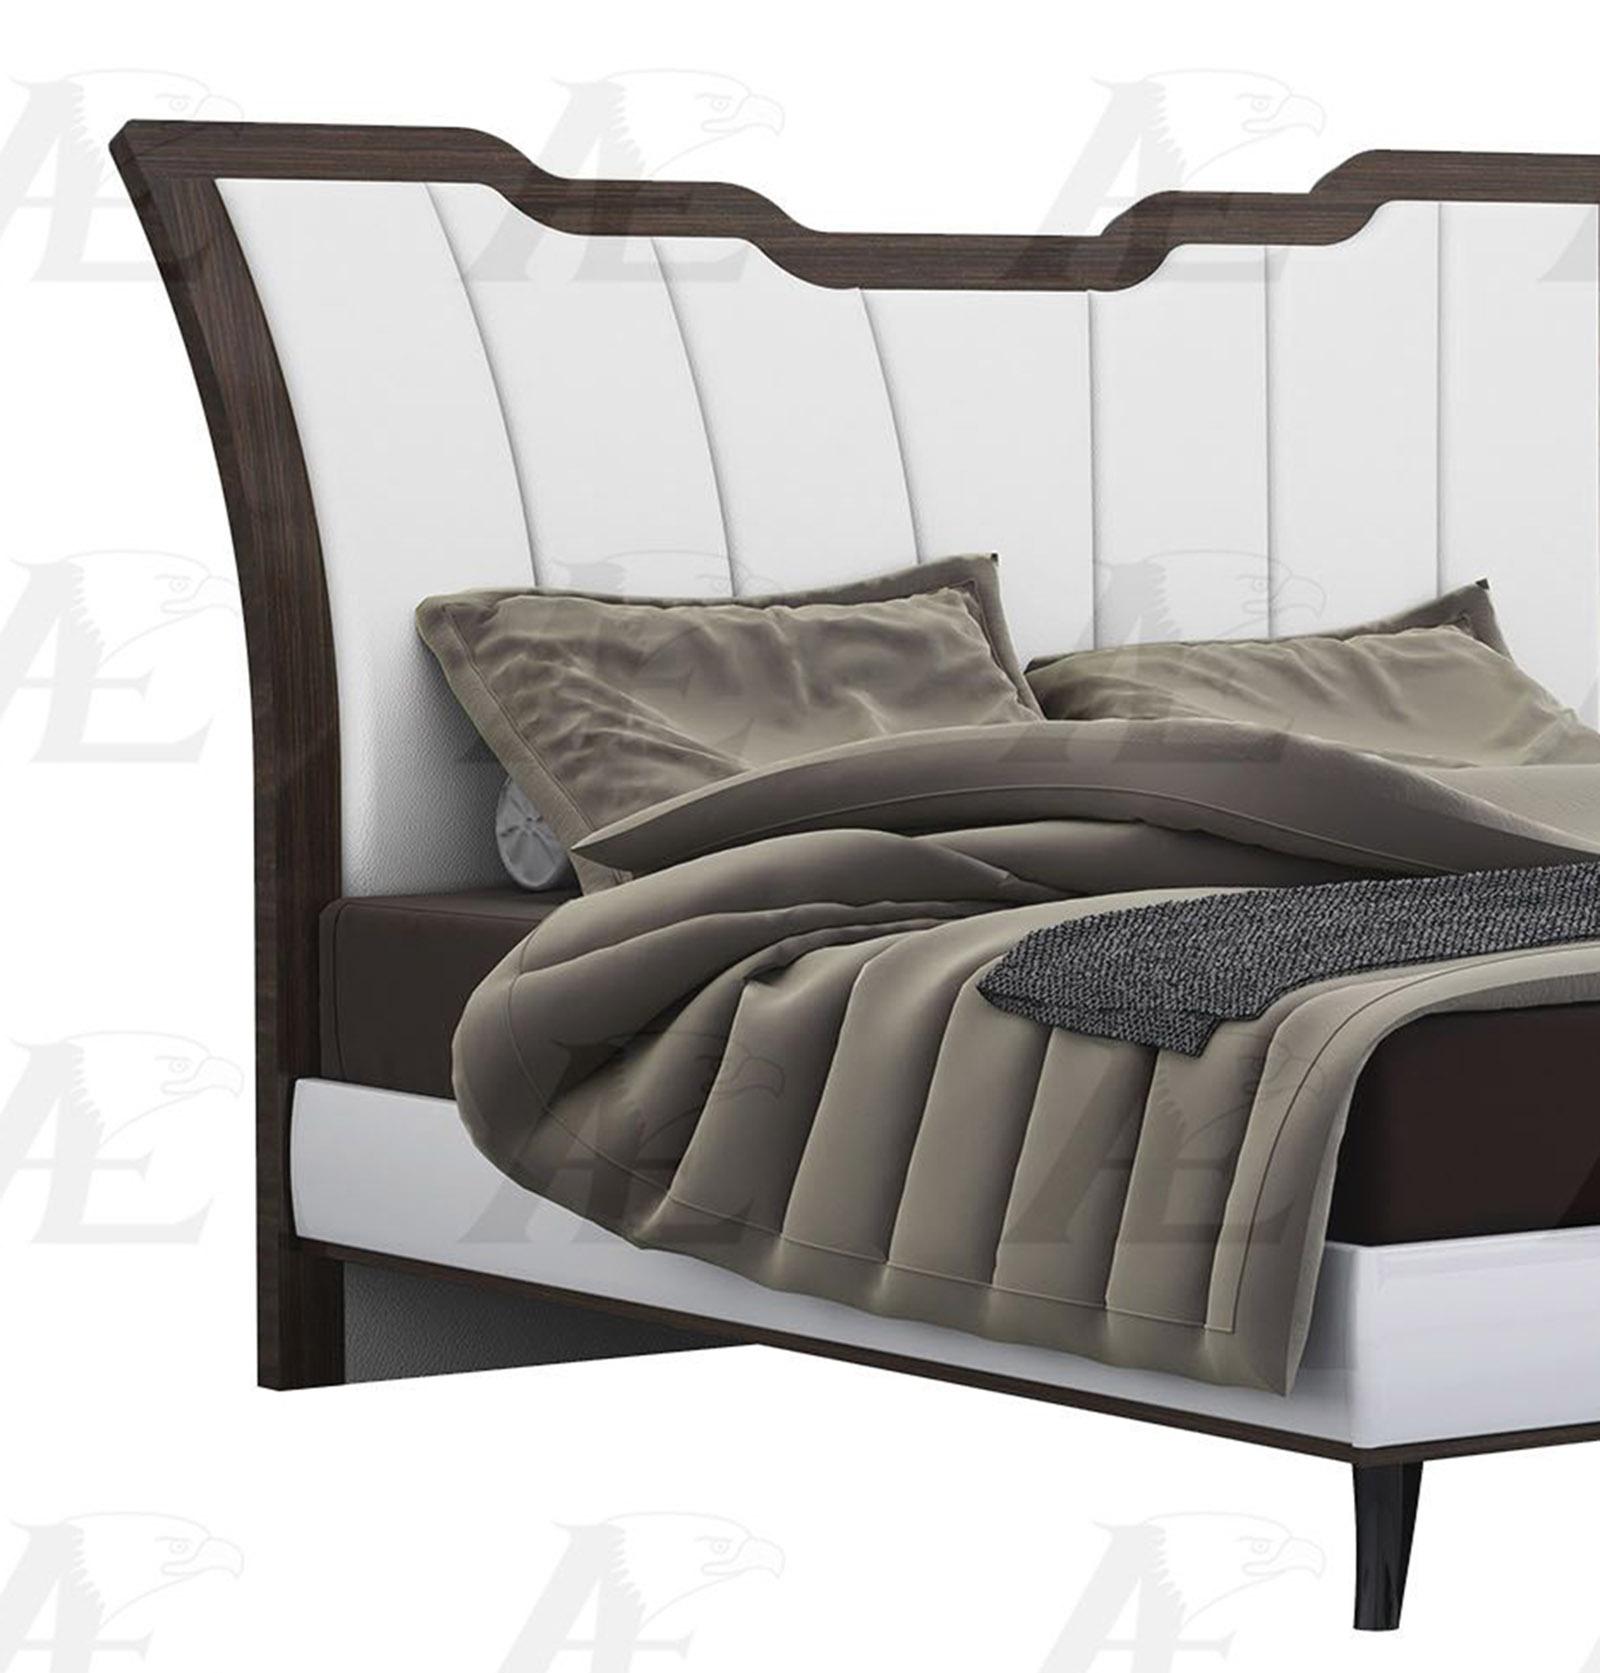 

    
American Eagle Furniture B-P105 Platform Bed Brown/White AE B-P105-Q
